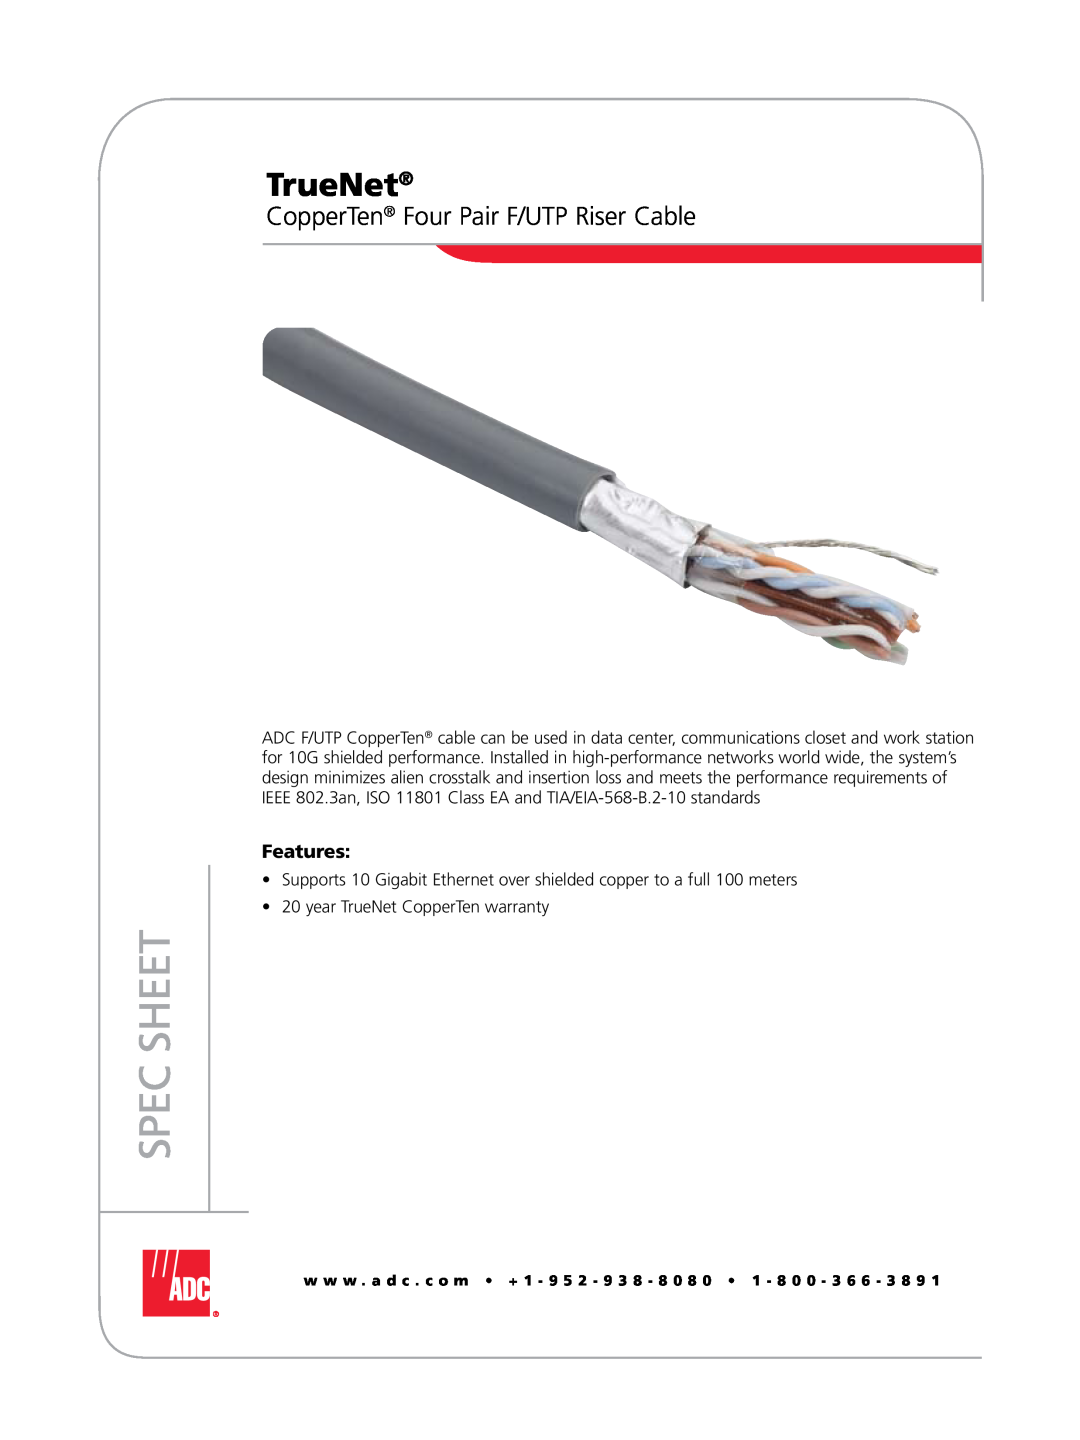 ADC warranty CopperTen Four Pair F/UTP Riser Cable, Spec Sheet, Features, year TrueNet CopperTen warranty 